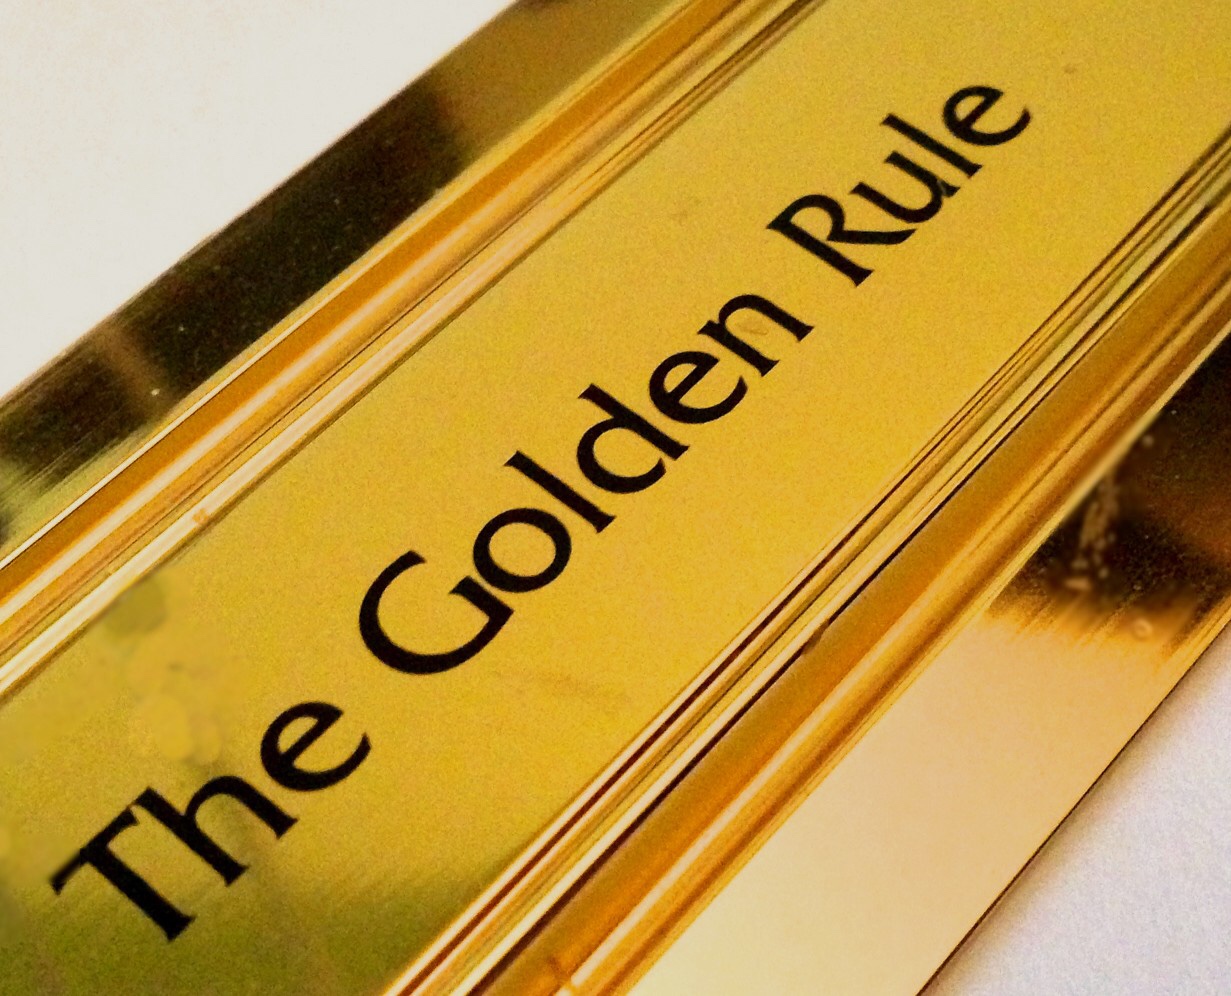 Estée Lauder: The 15 Golden Rules of Entrepreneurship